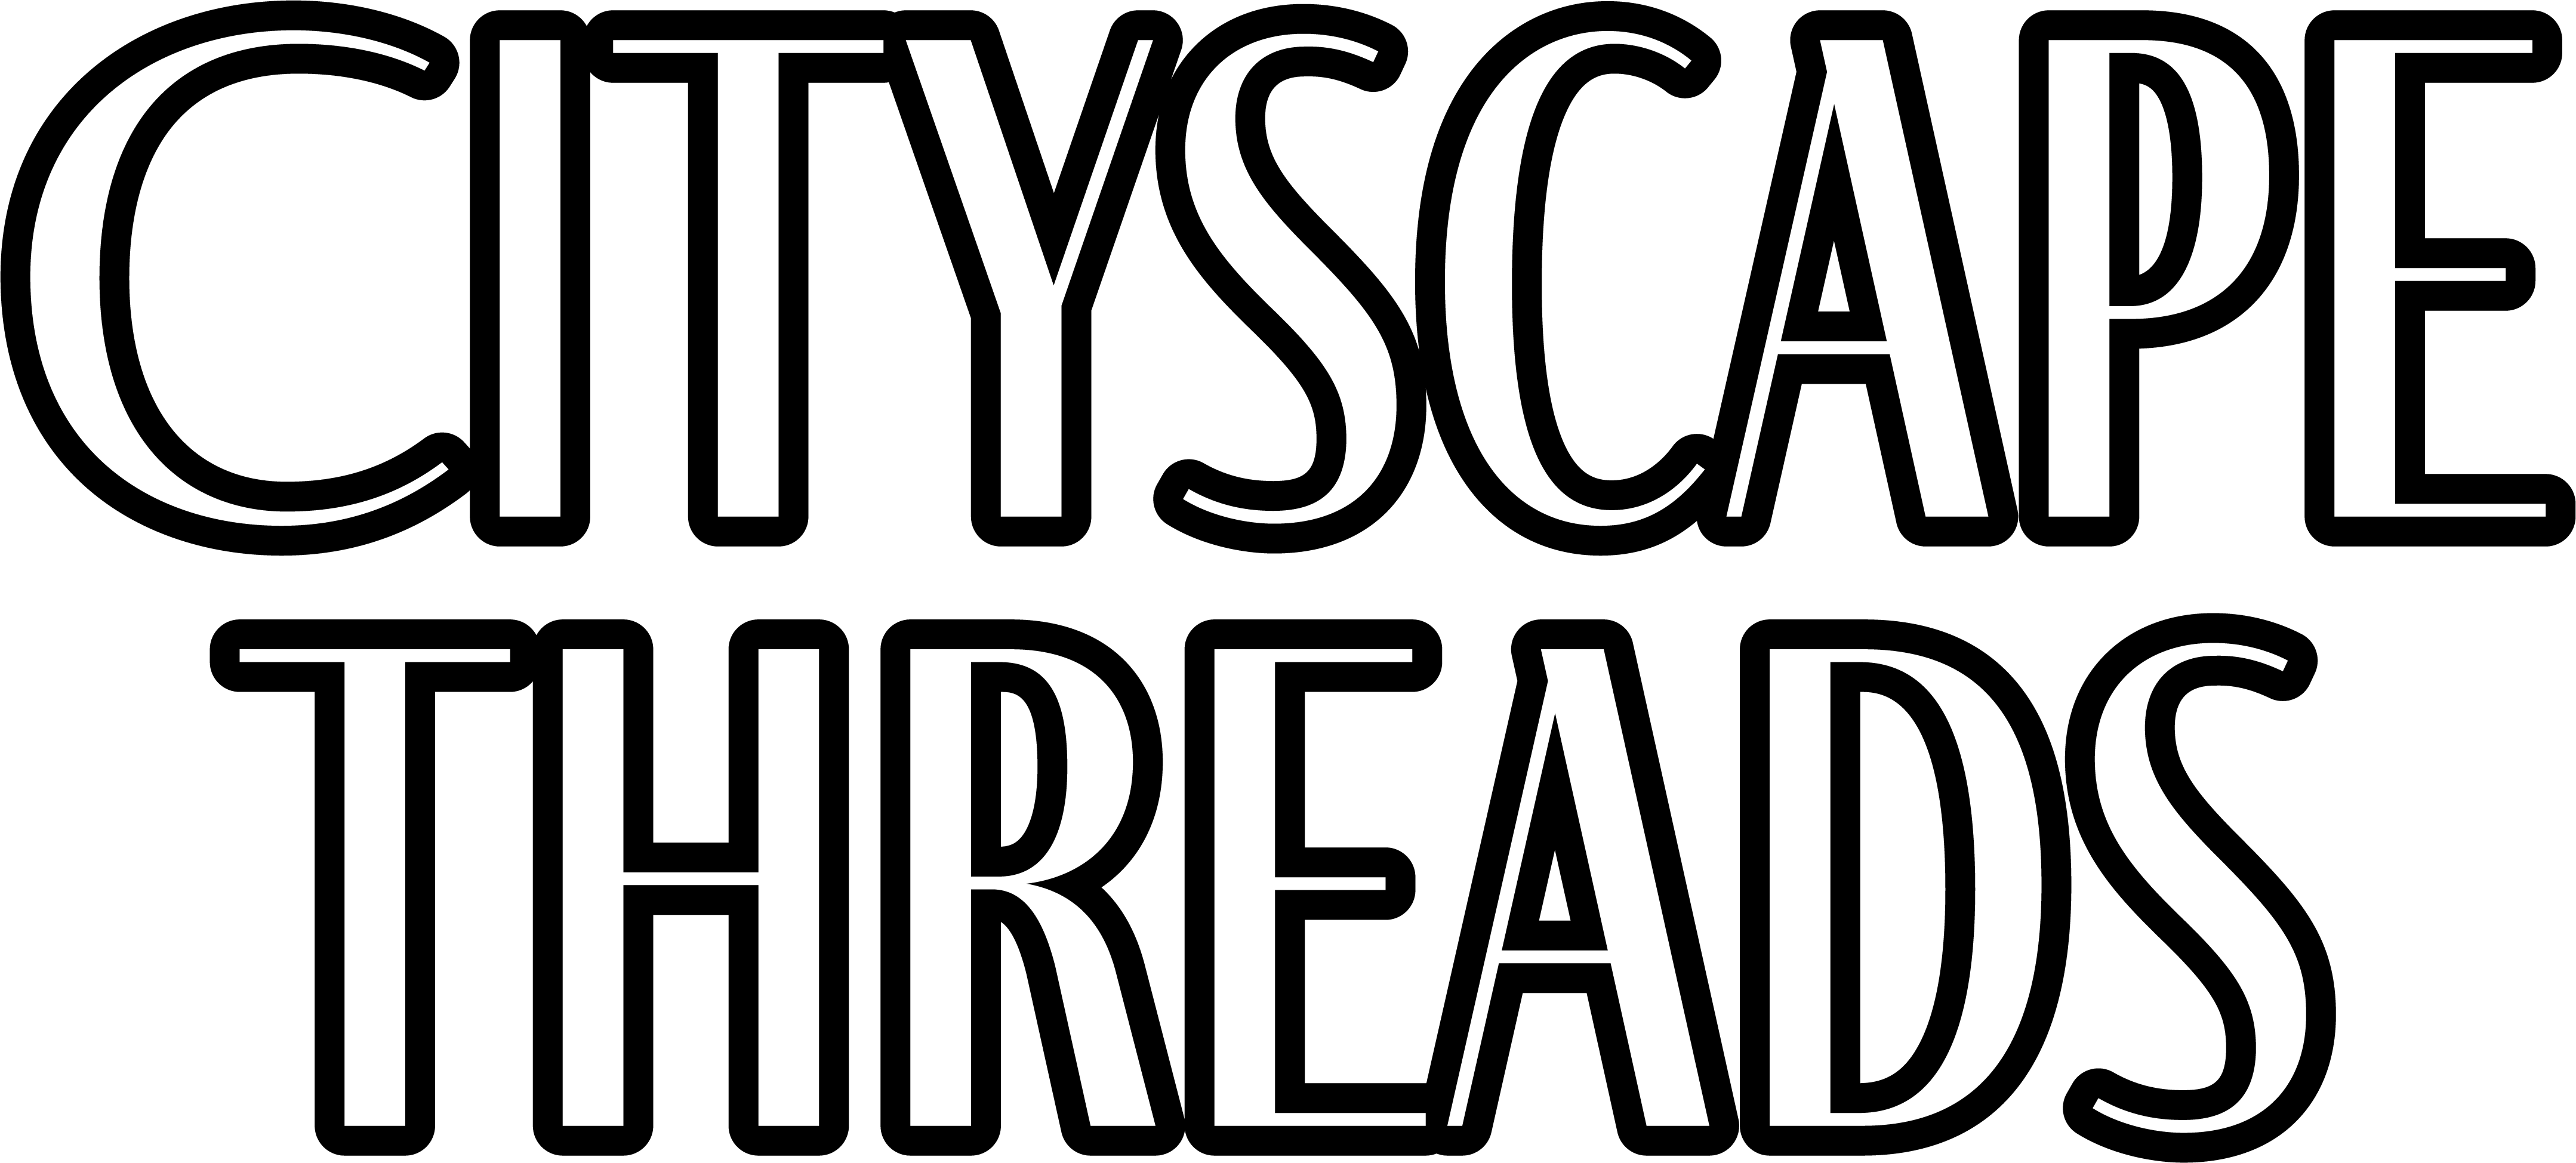 Cityscape Threads